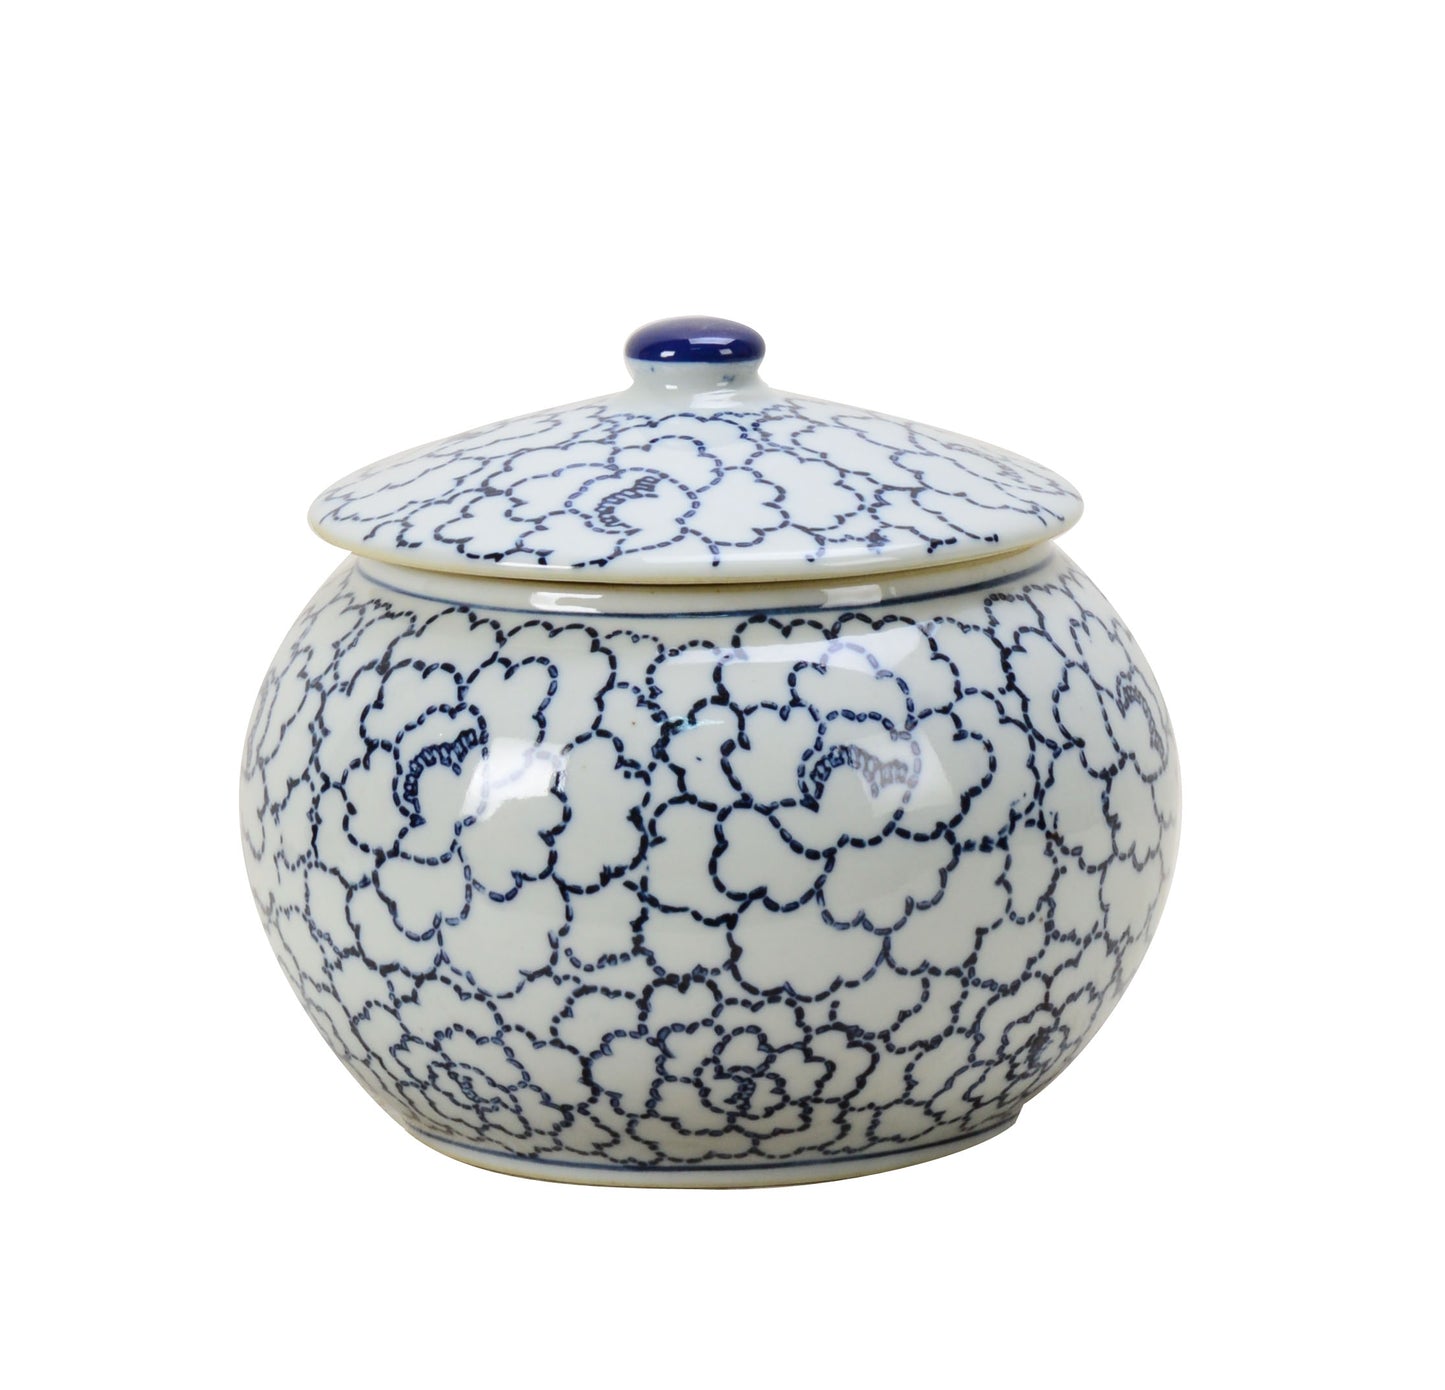 Floral Blue and White Ceramic Ginger Jar - 16cm